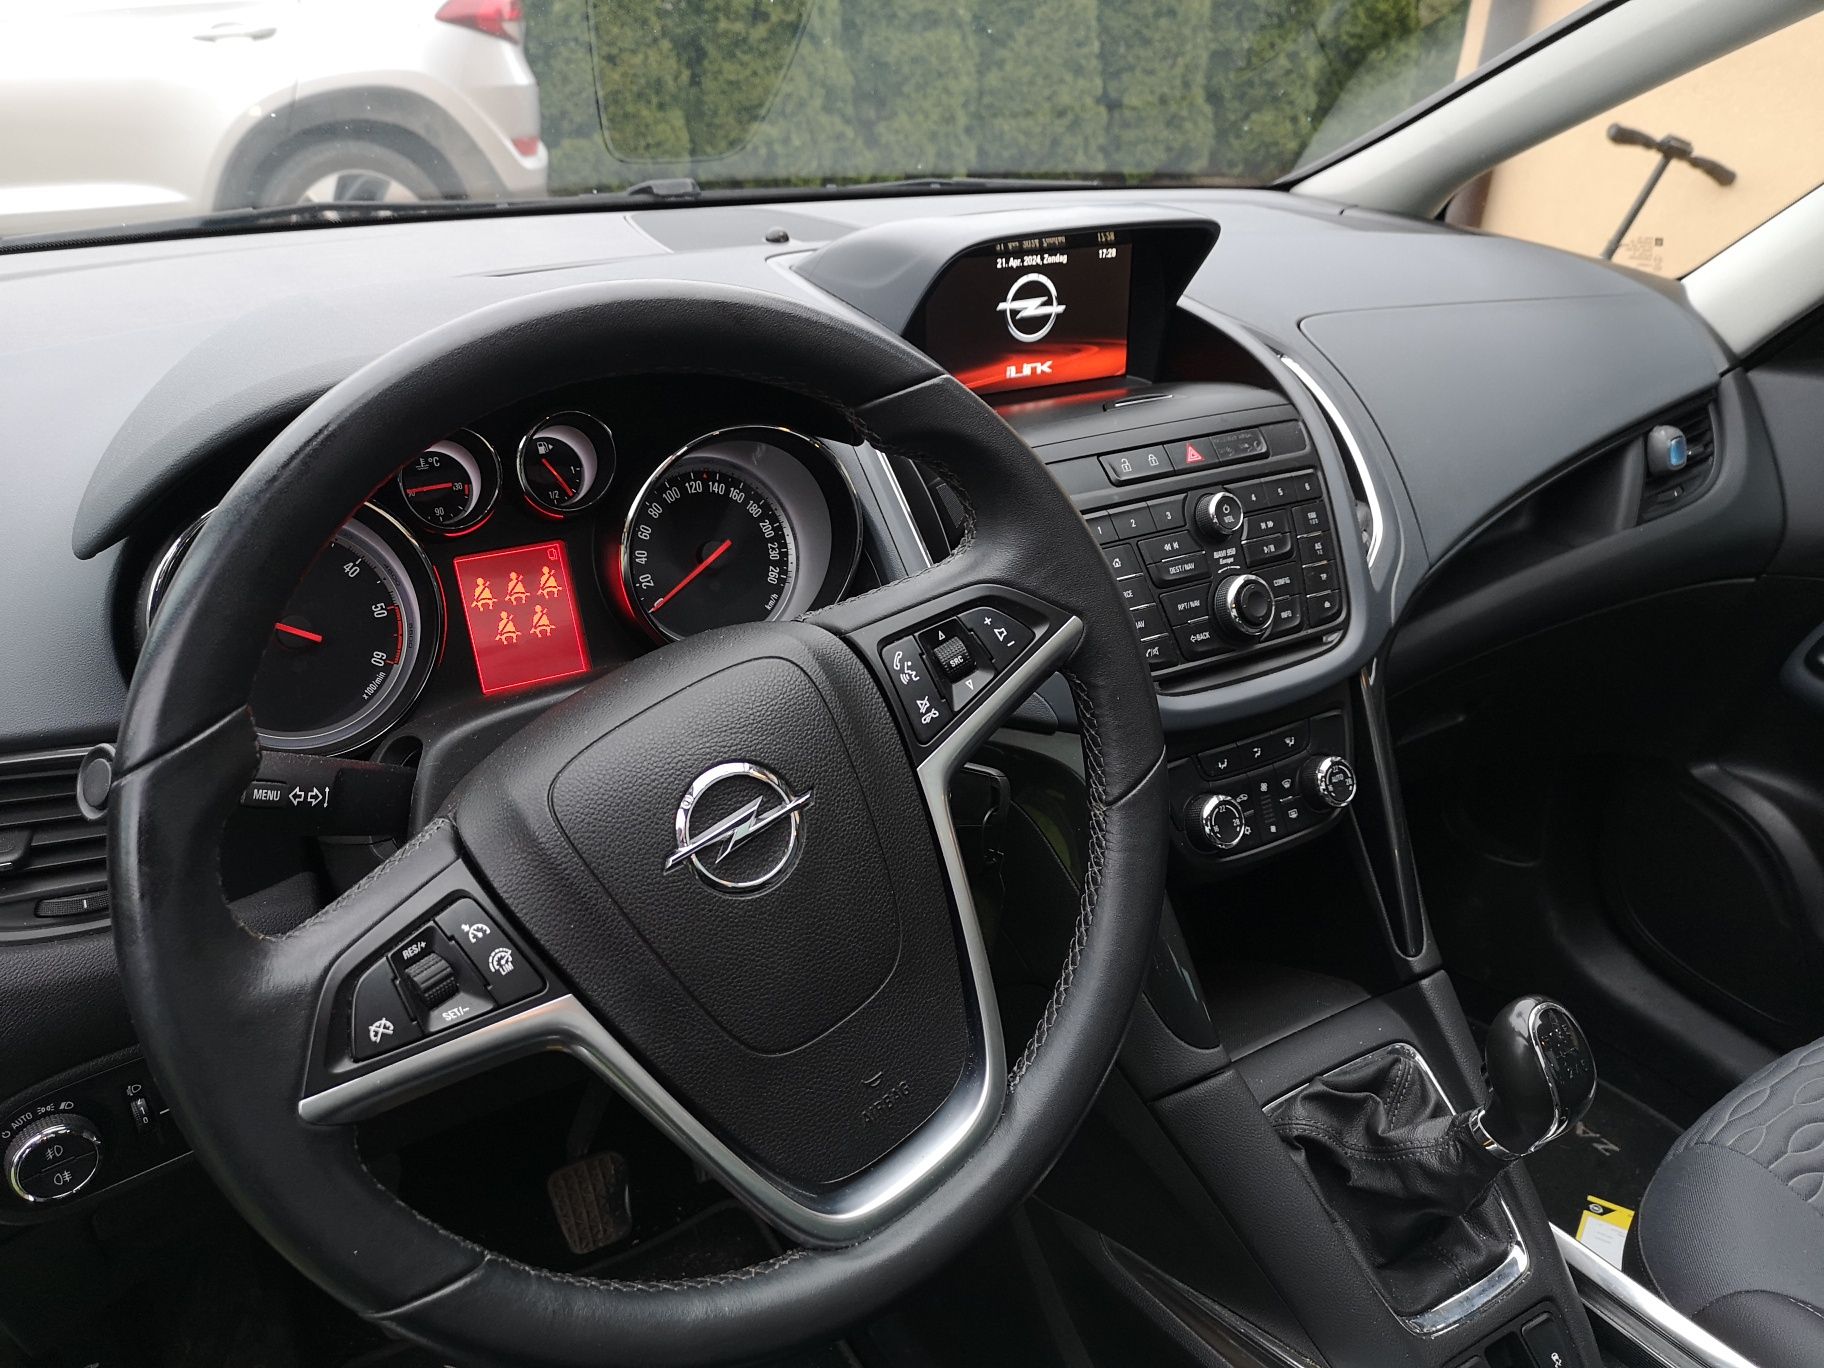 Opel Zafira C Tourer 1.6 CDTI panorama